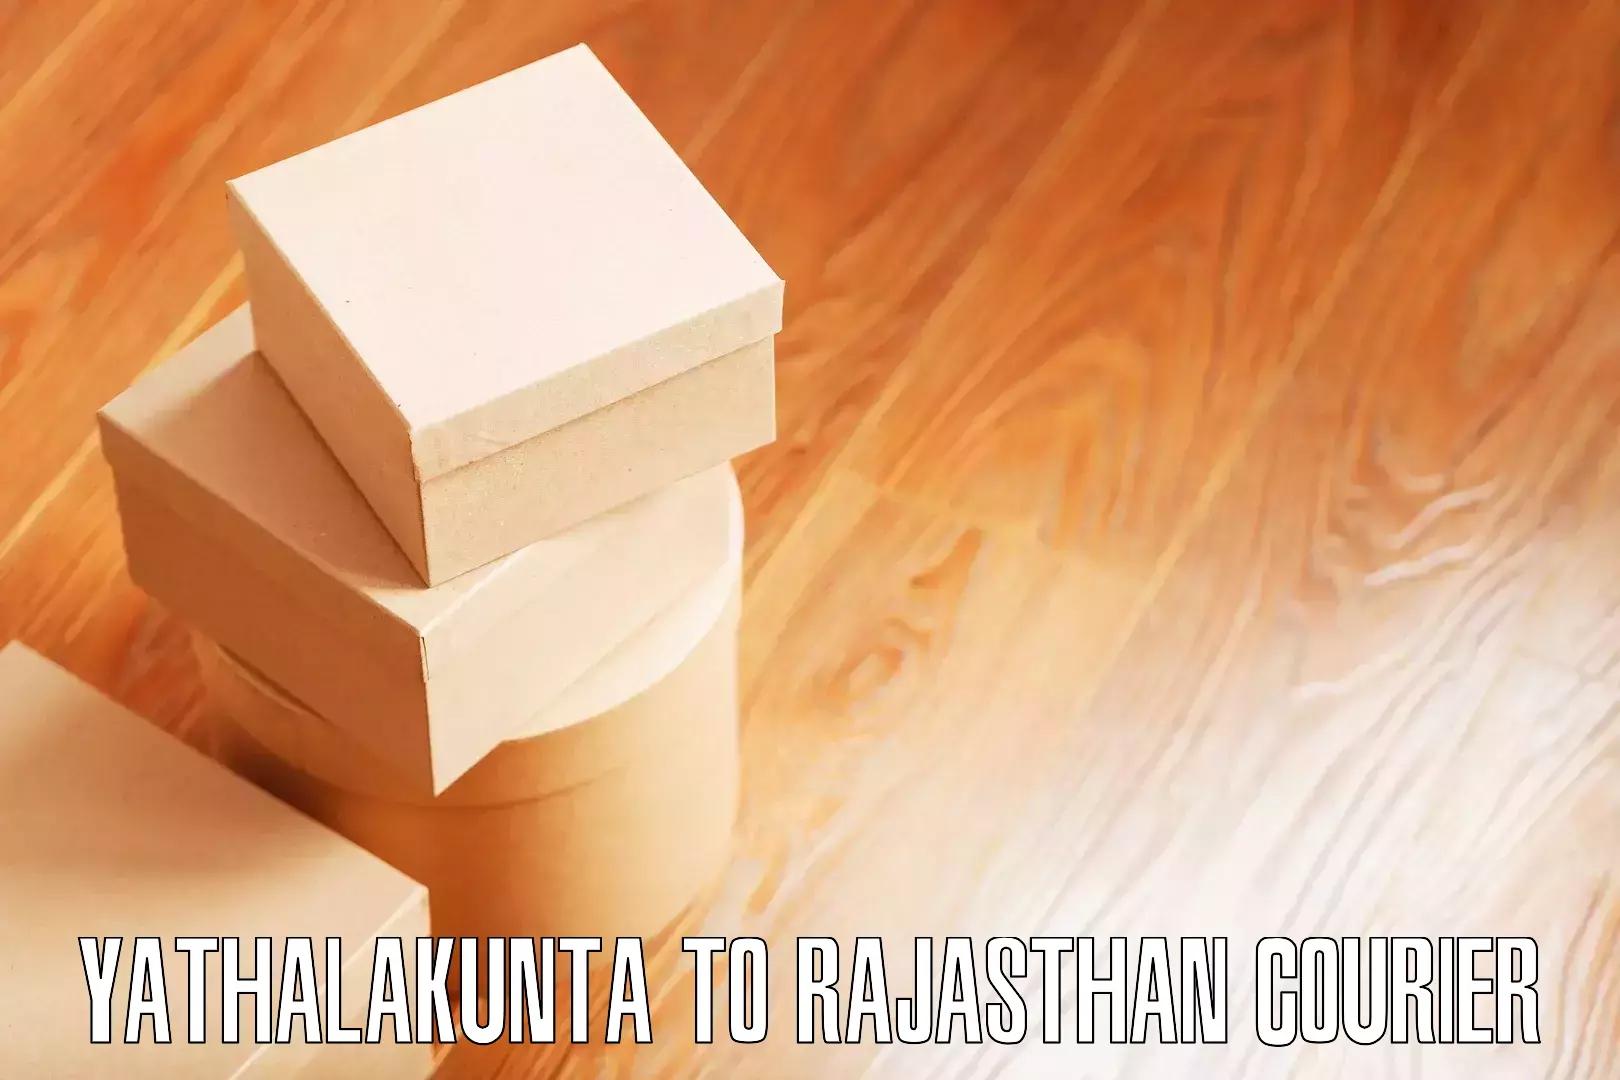 Efficient moving and packing Yathalakunta to Ras Pali